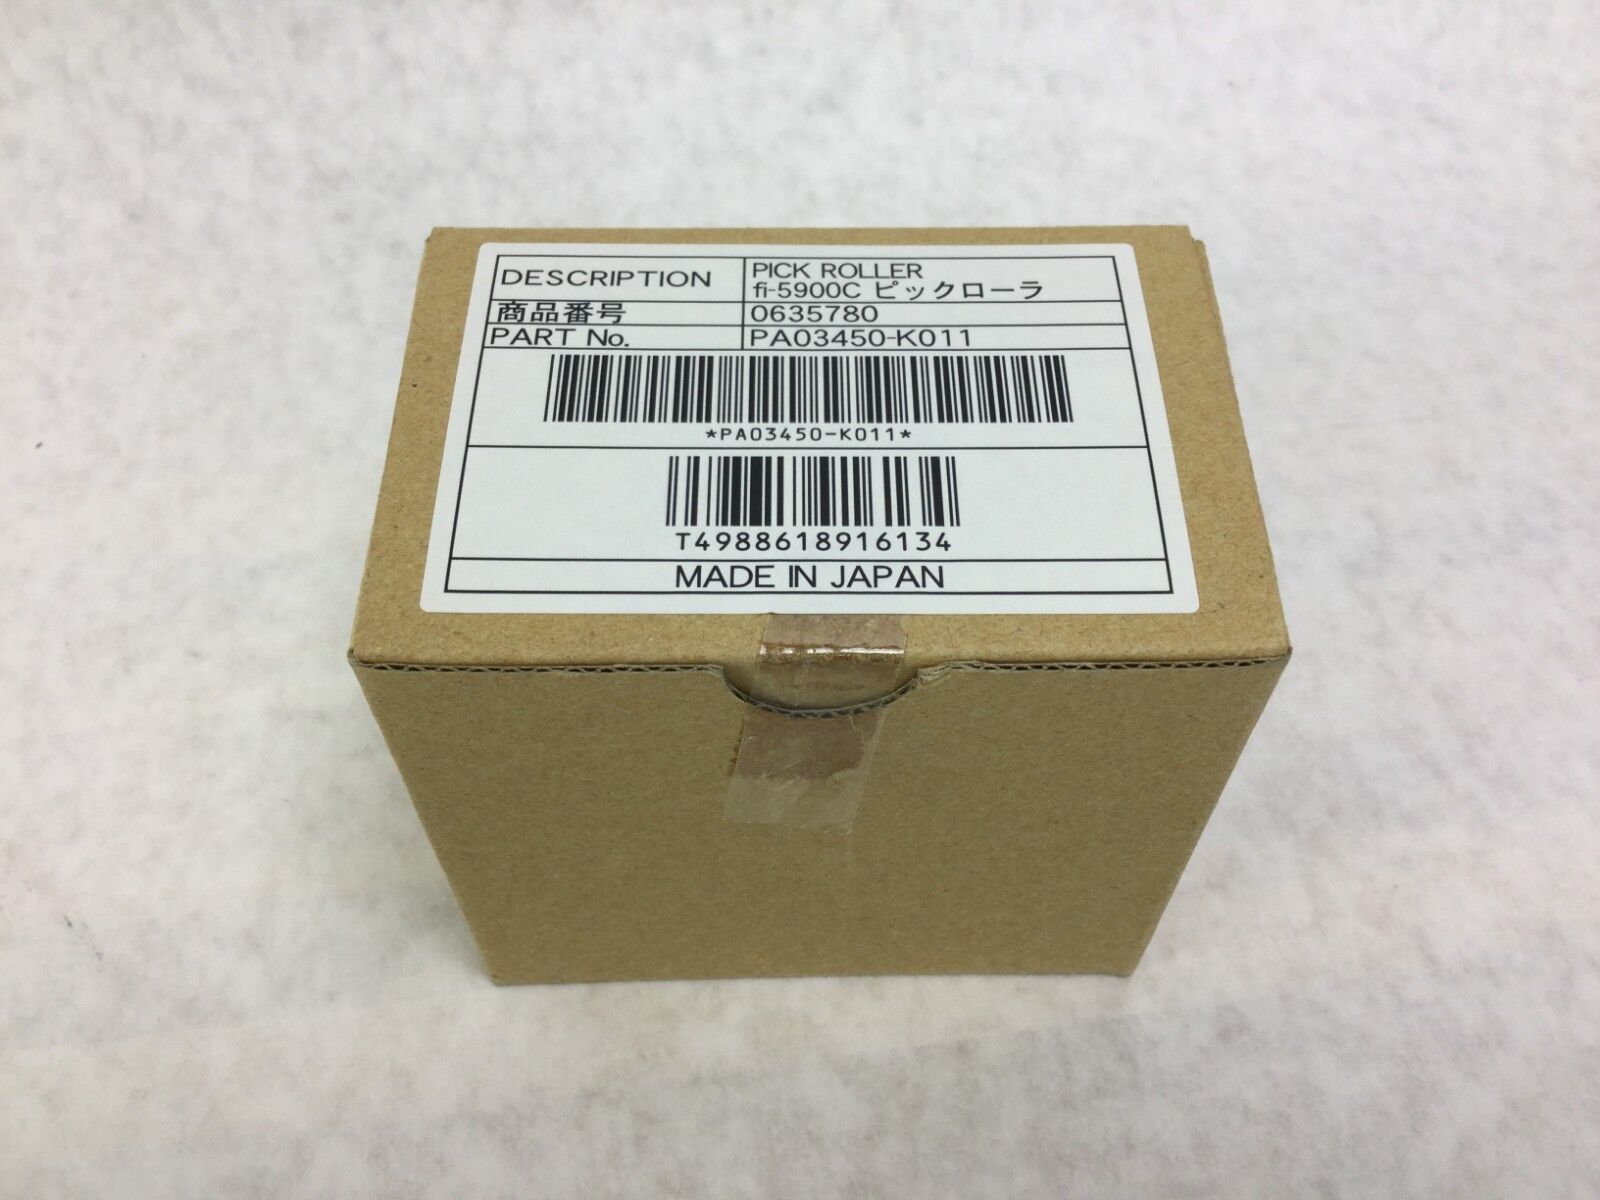 Pick Roller for Fujitsu fi-5900C PA03450-K011 - Boxed Set